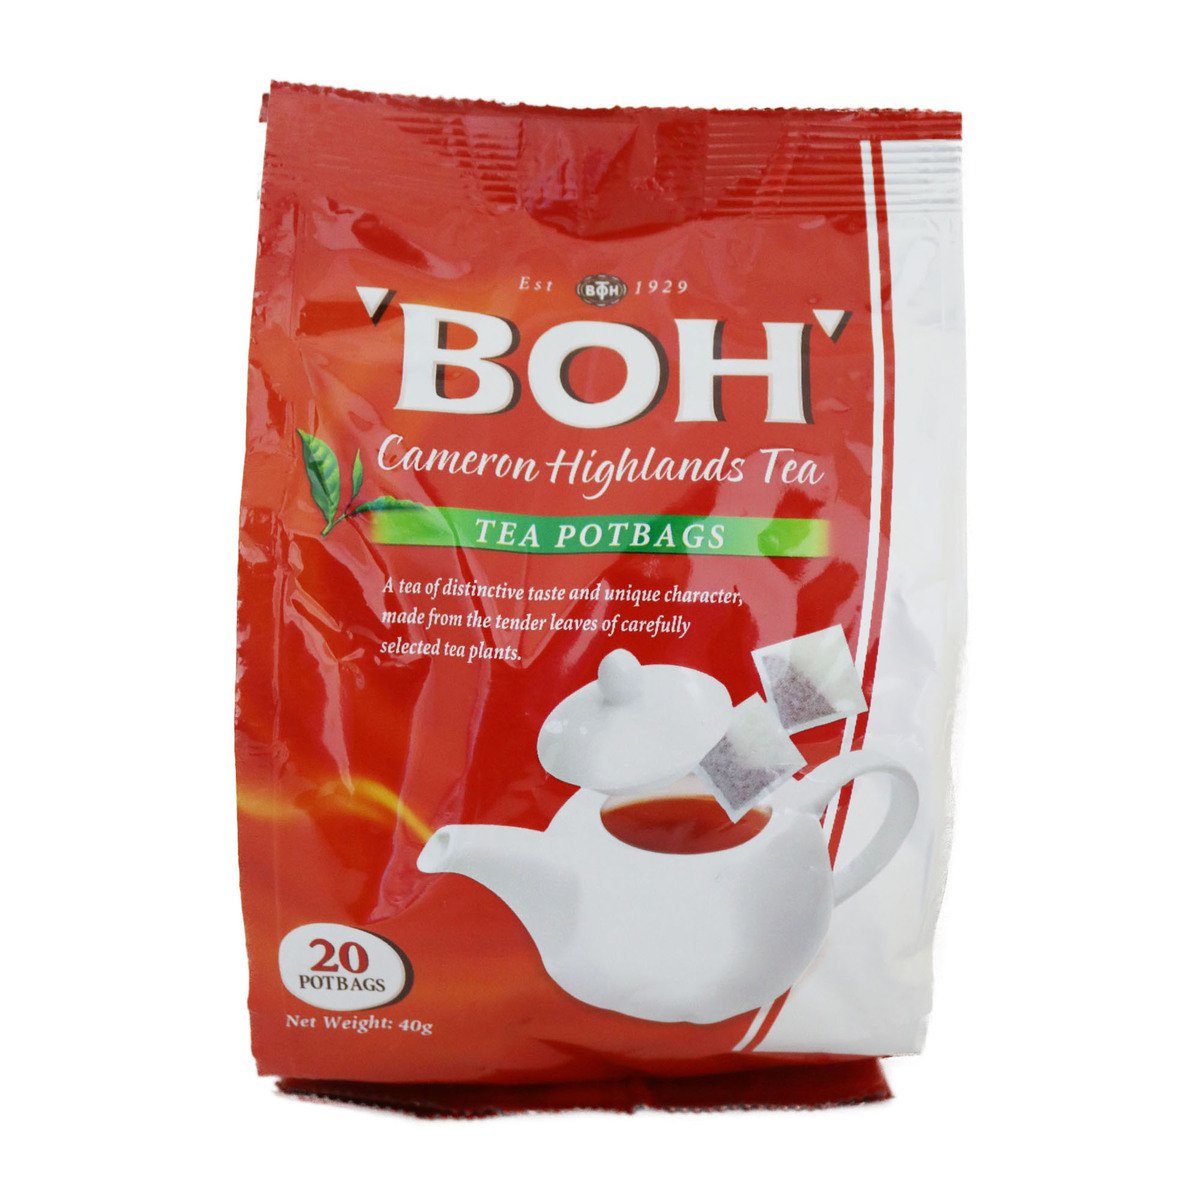 Boh Tea Potbags 20pcs